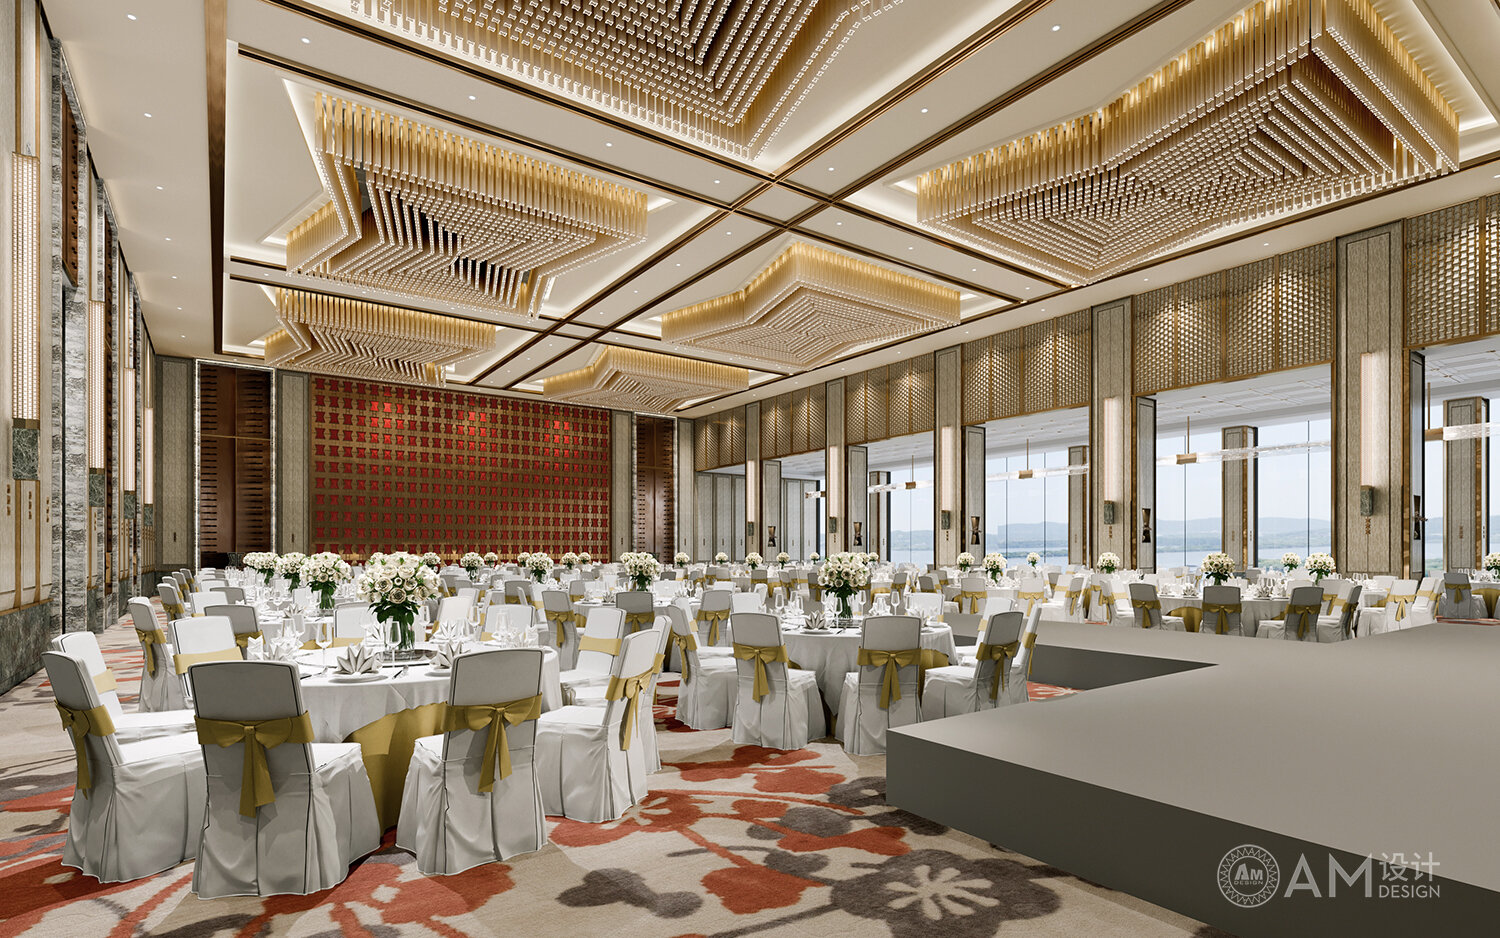 AM DESIGN | banquet hall design of Hanzhong South Lake Resort Hotel